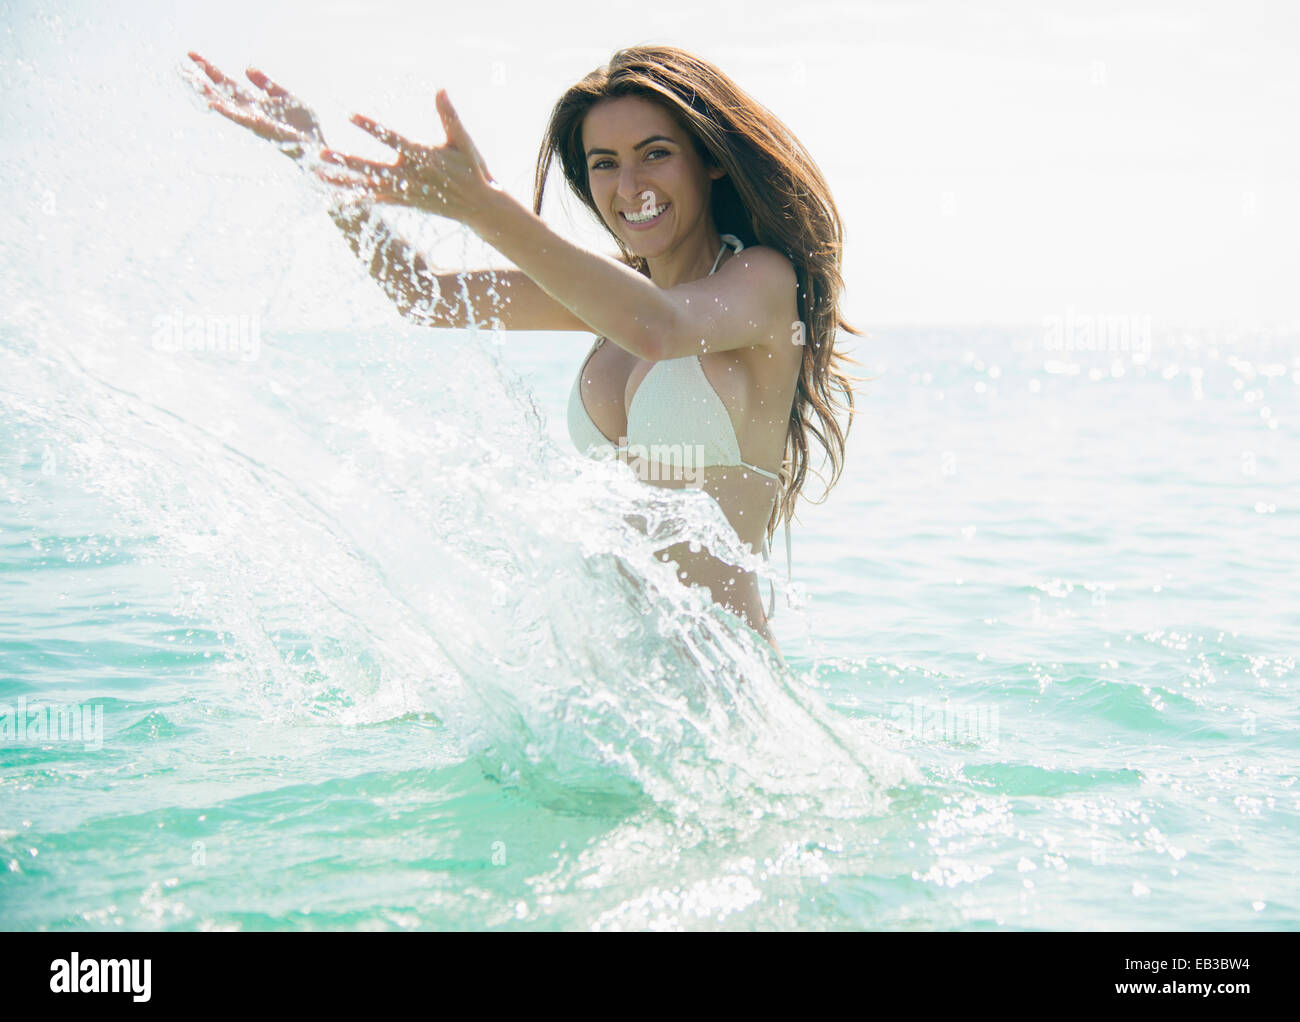 Caucasian woman splashing in ocean Banque D'Images